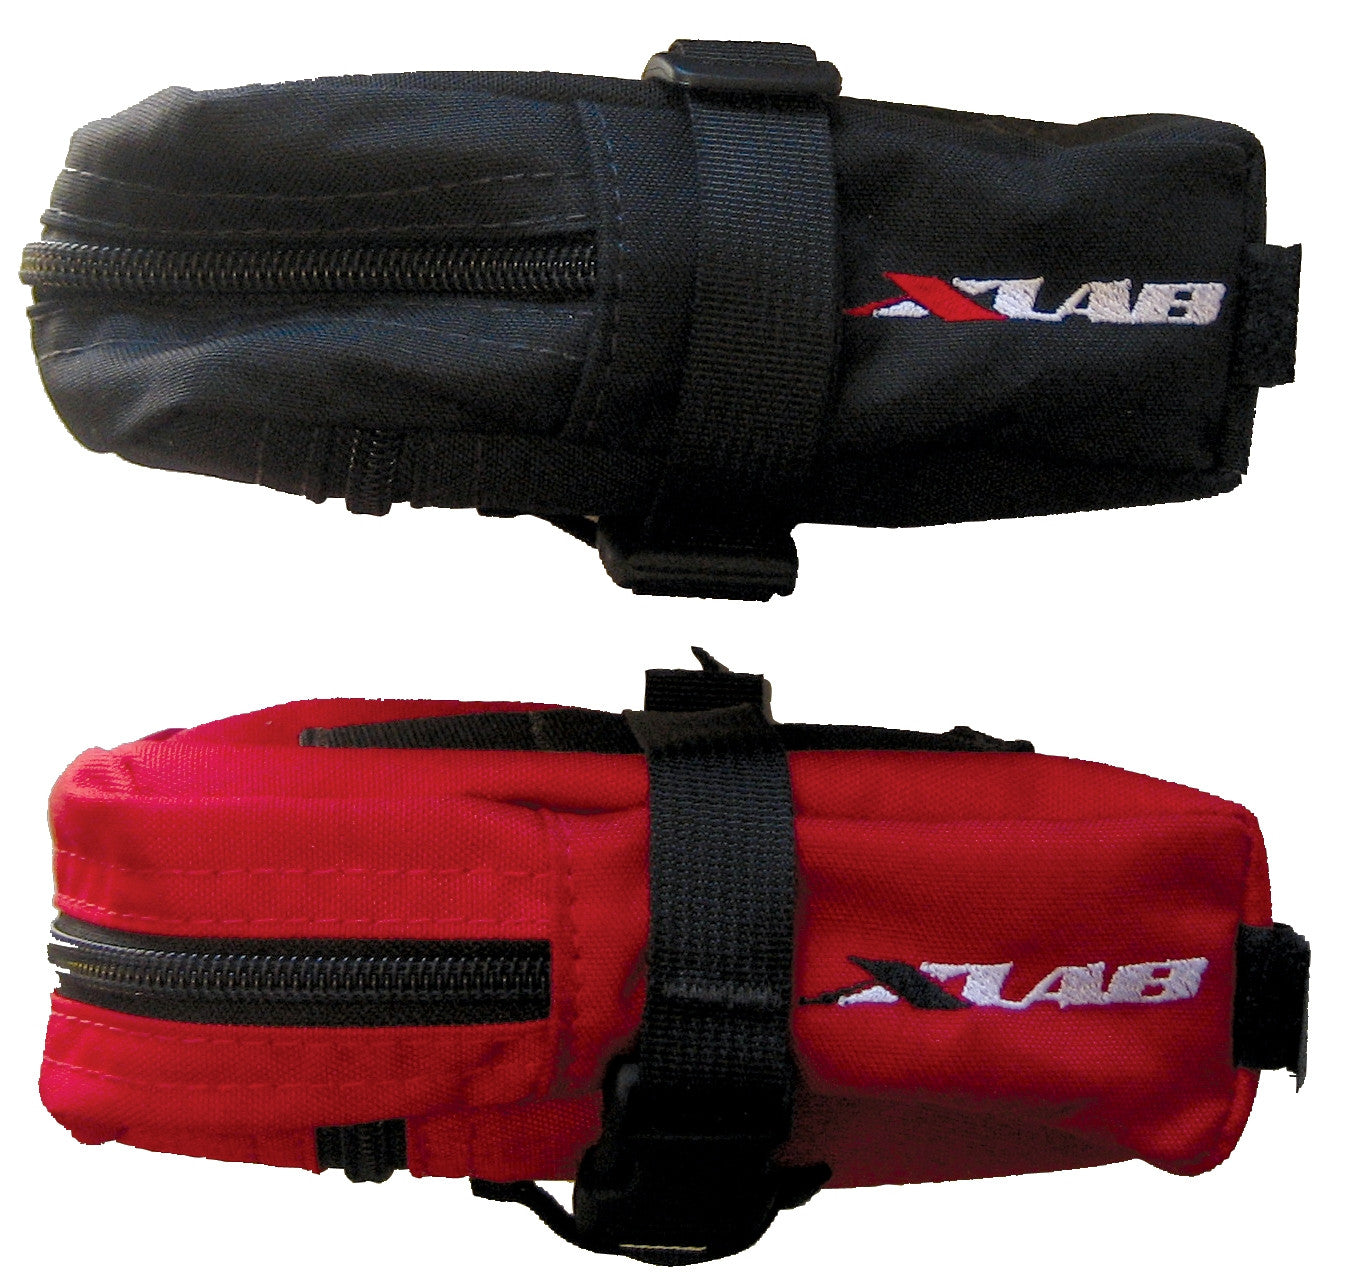 XLAB Mezzo Bag Black - Fluidlines